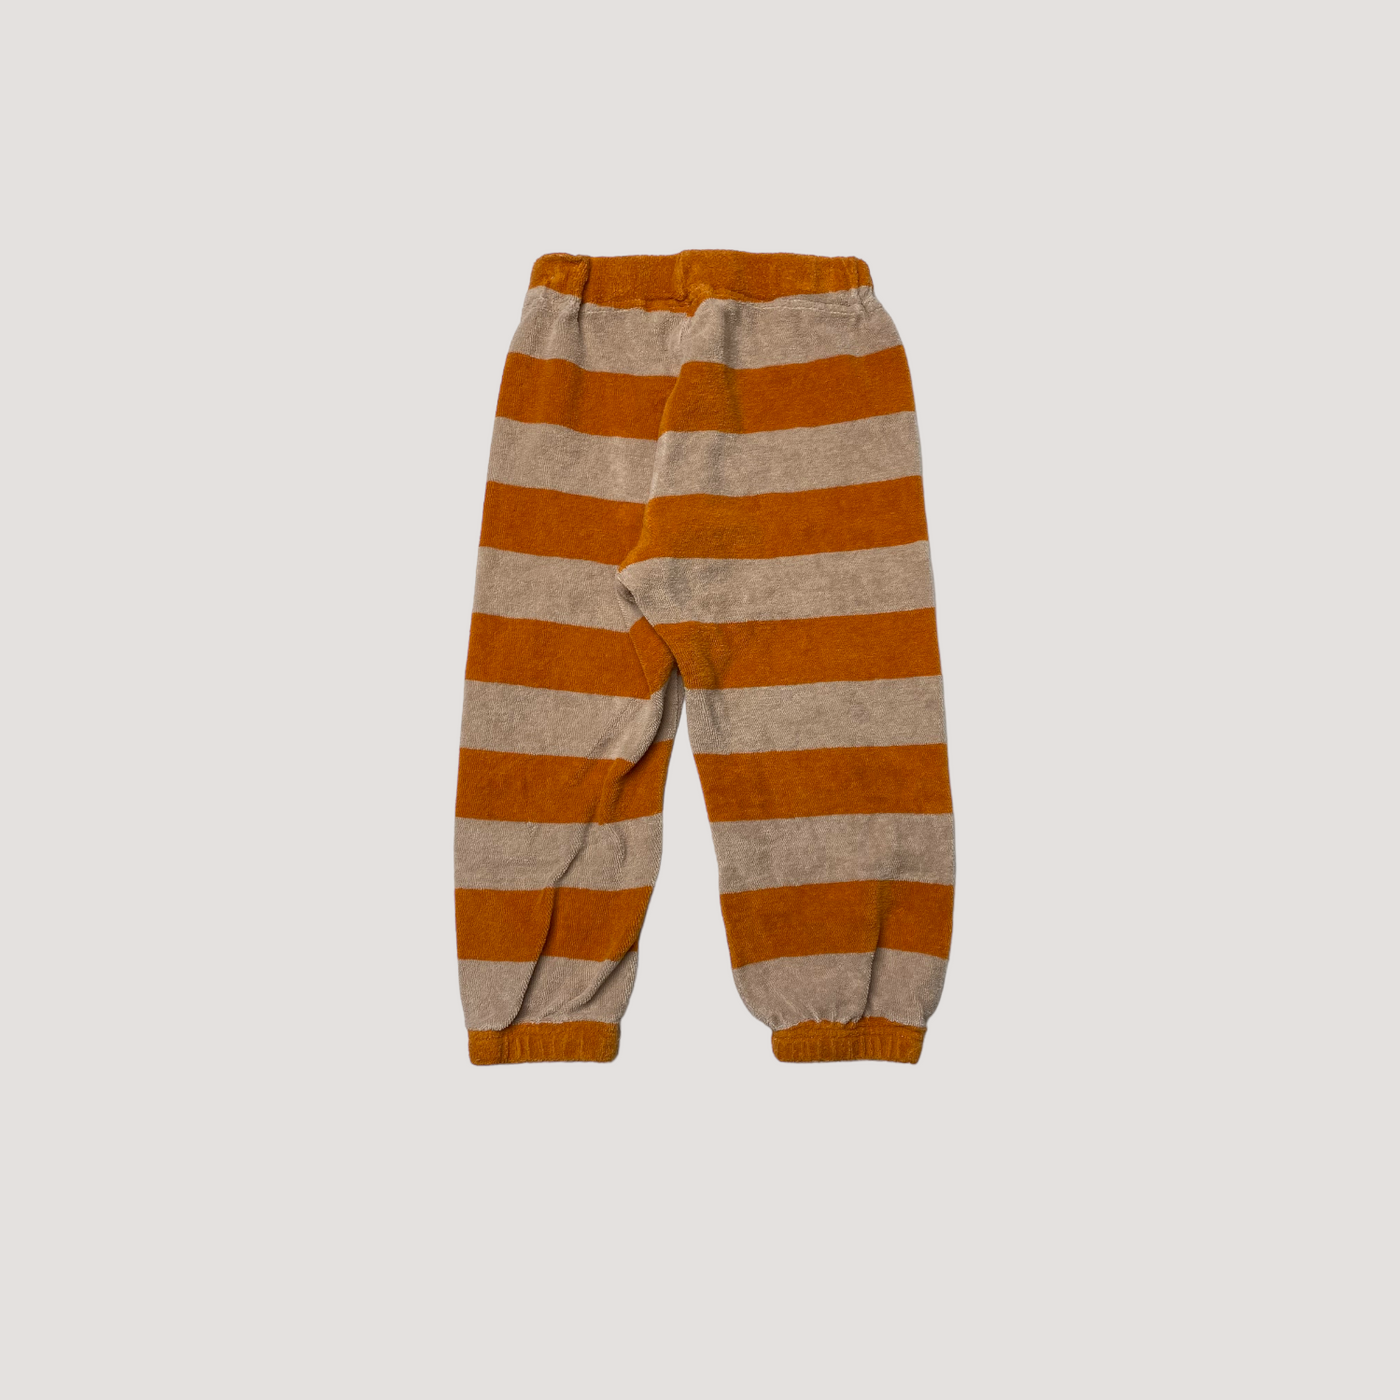 Mainio terry pants, stripes | 86/92cm